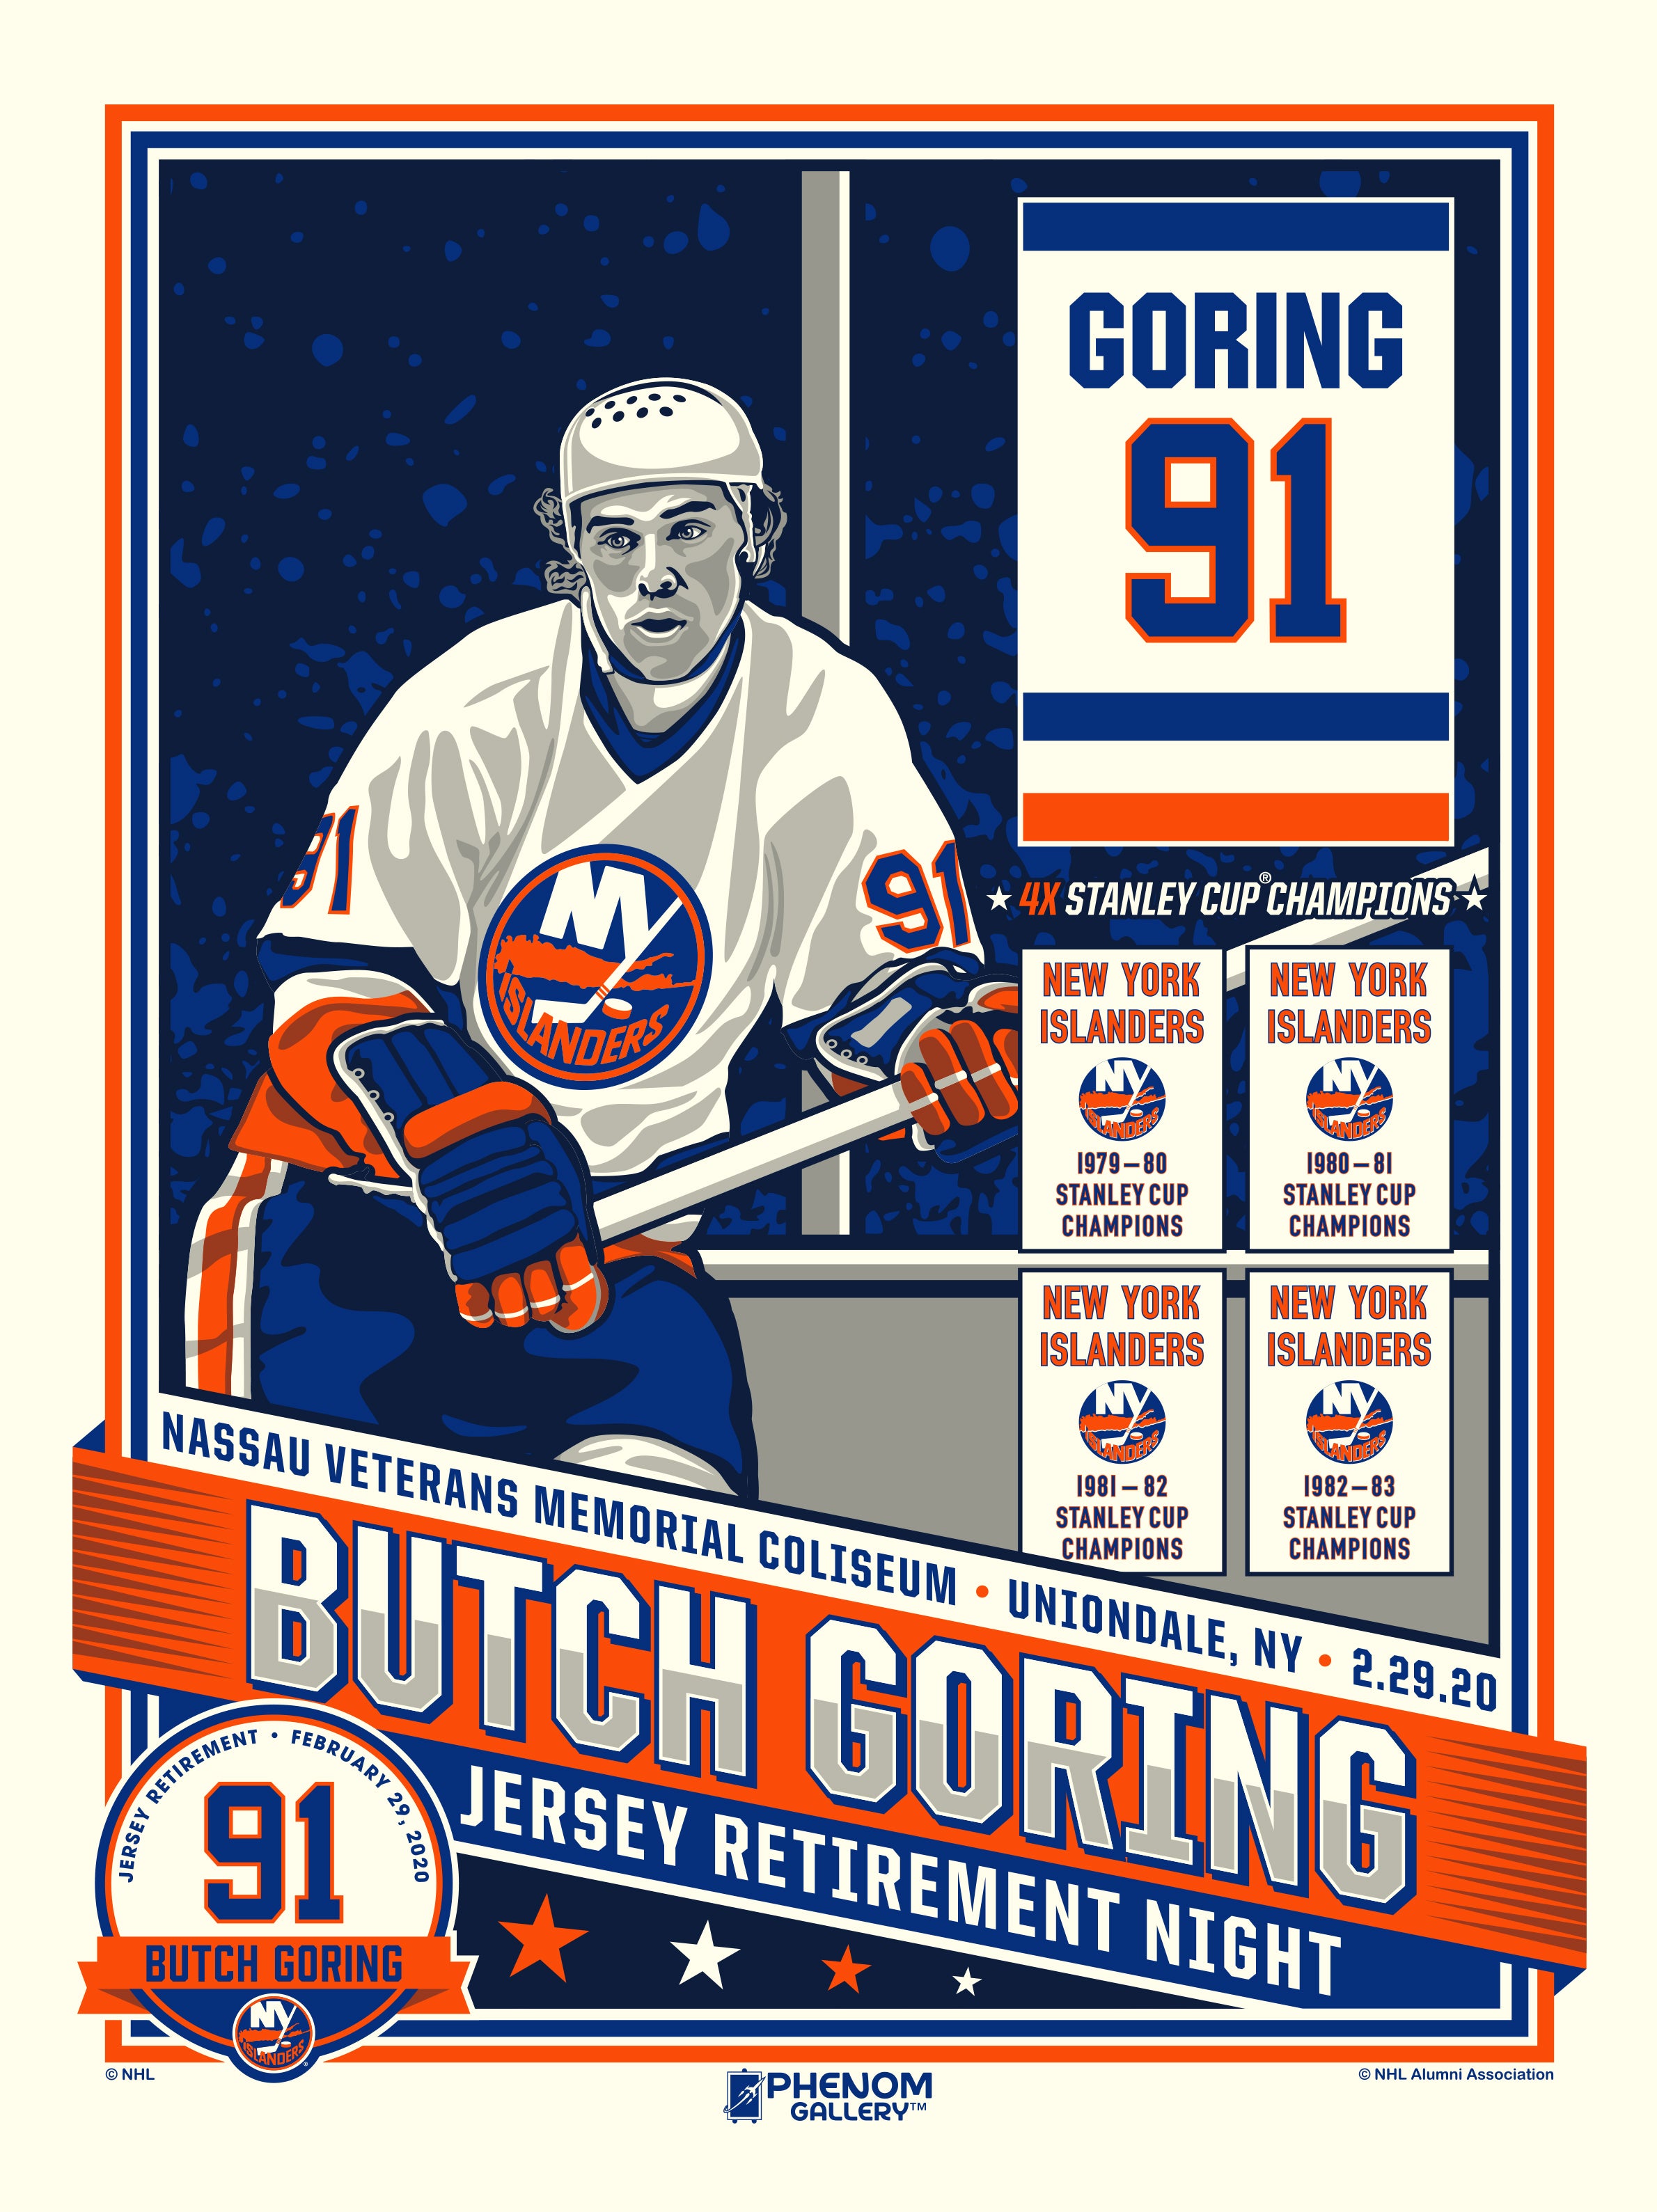 New York Islander Fan Central: Butch Goring's Day !!!